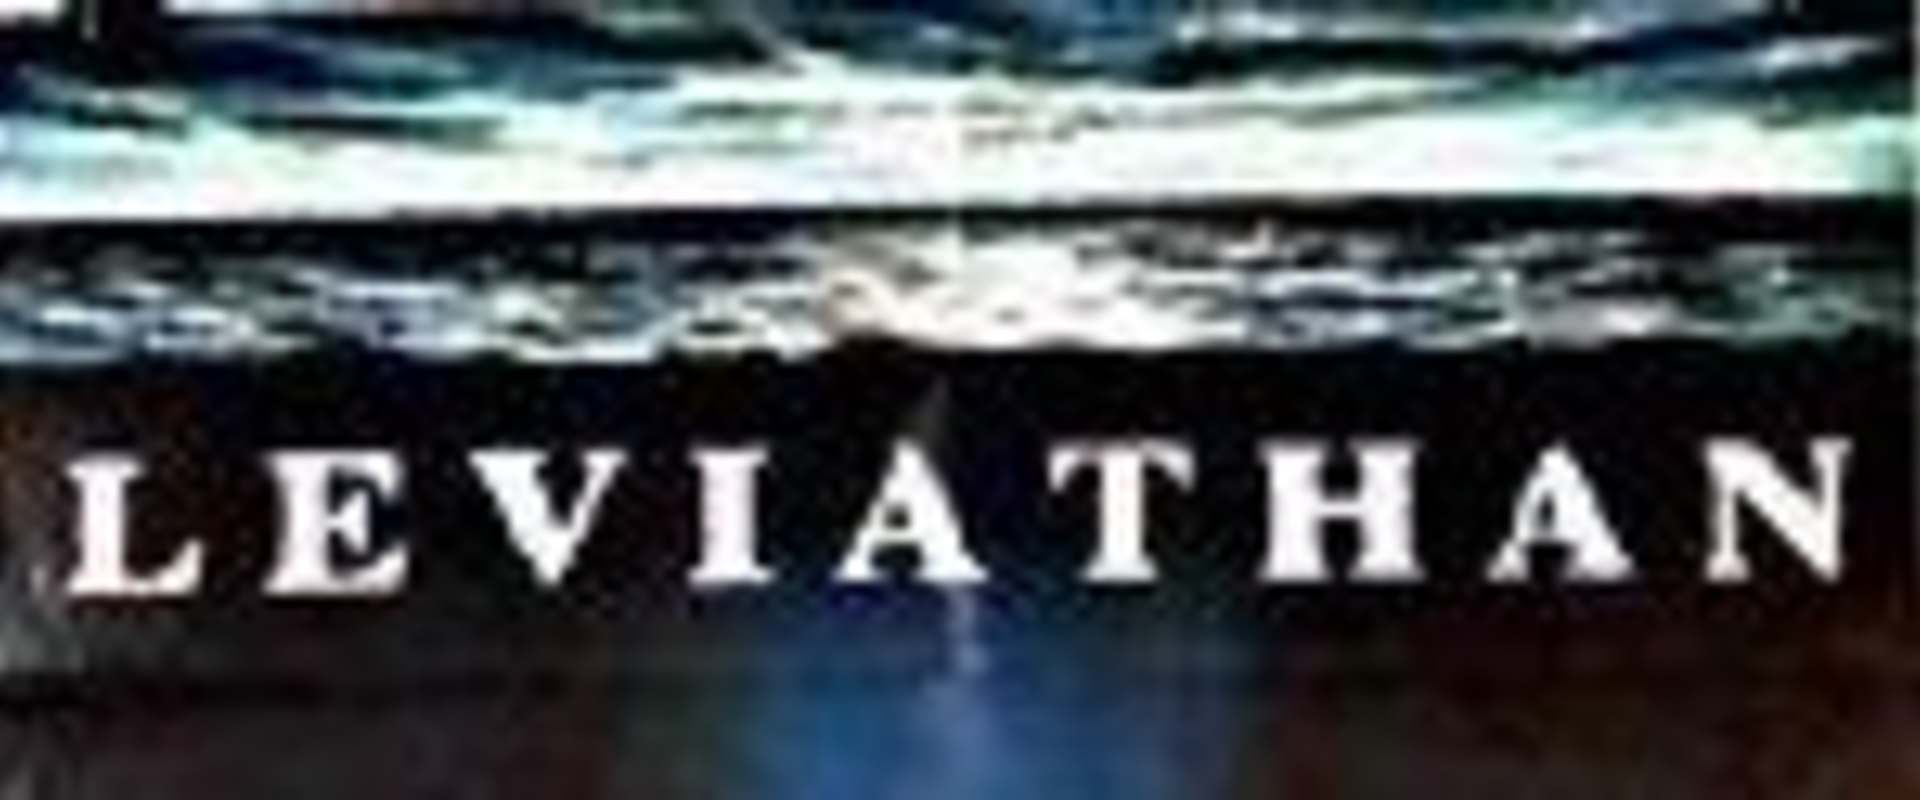 Leviathan background 2